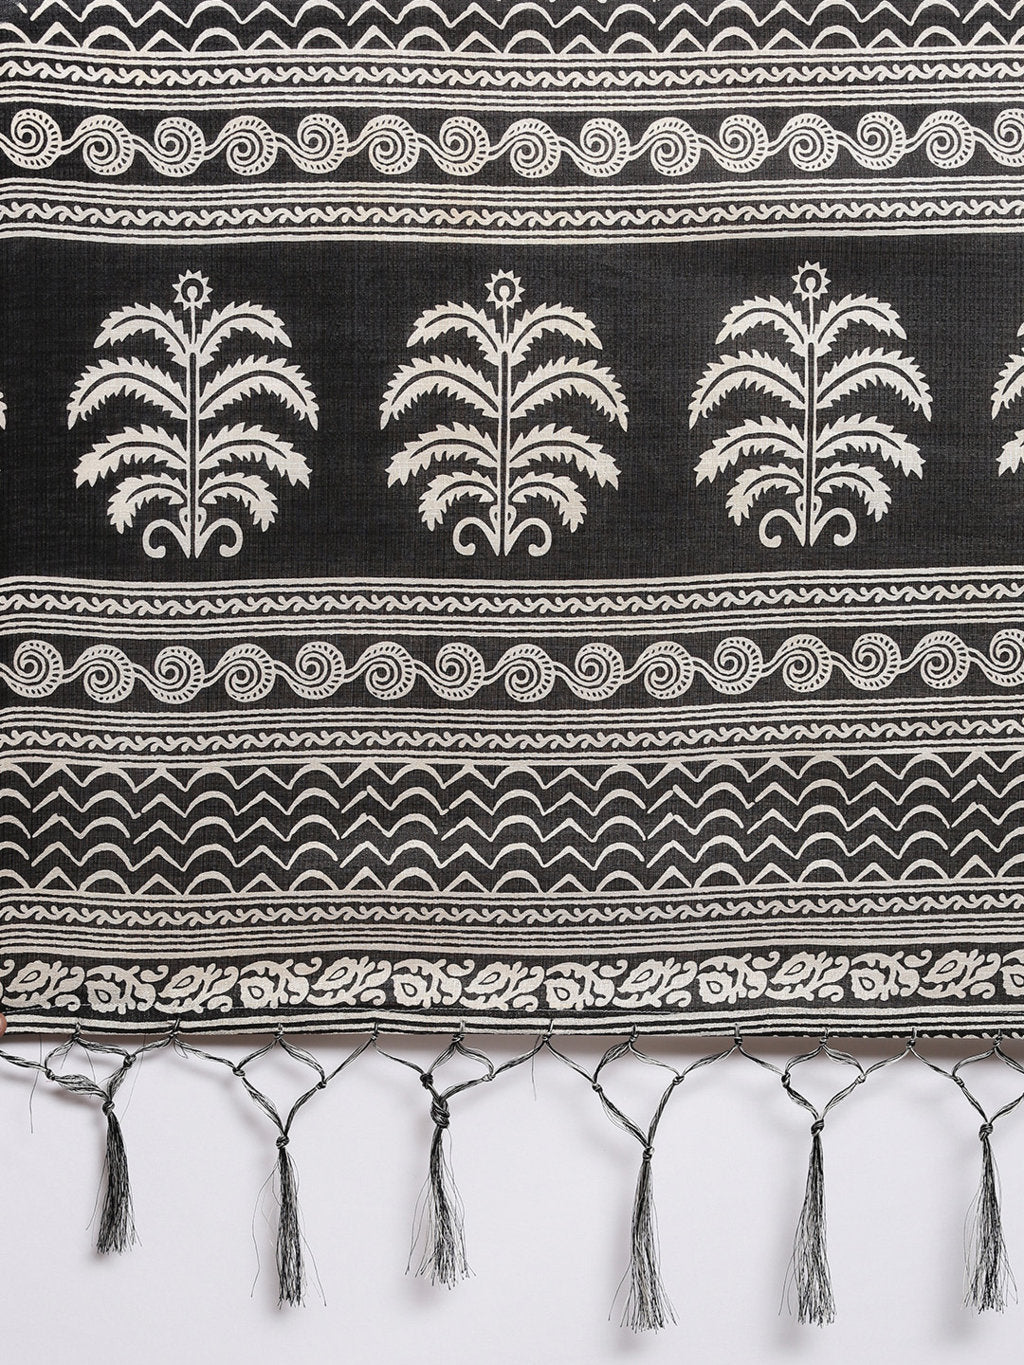 Women's Black Art Silk Printed Traditional Tassle Saree - Sangam Prints